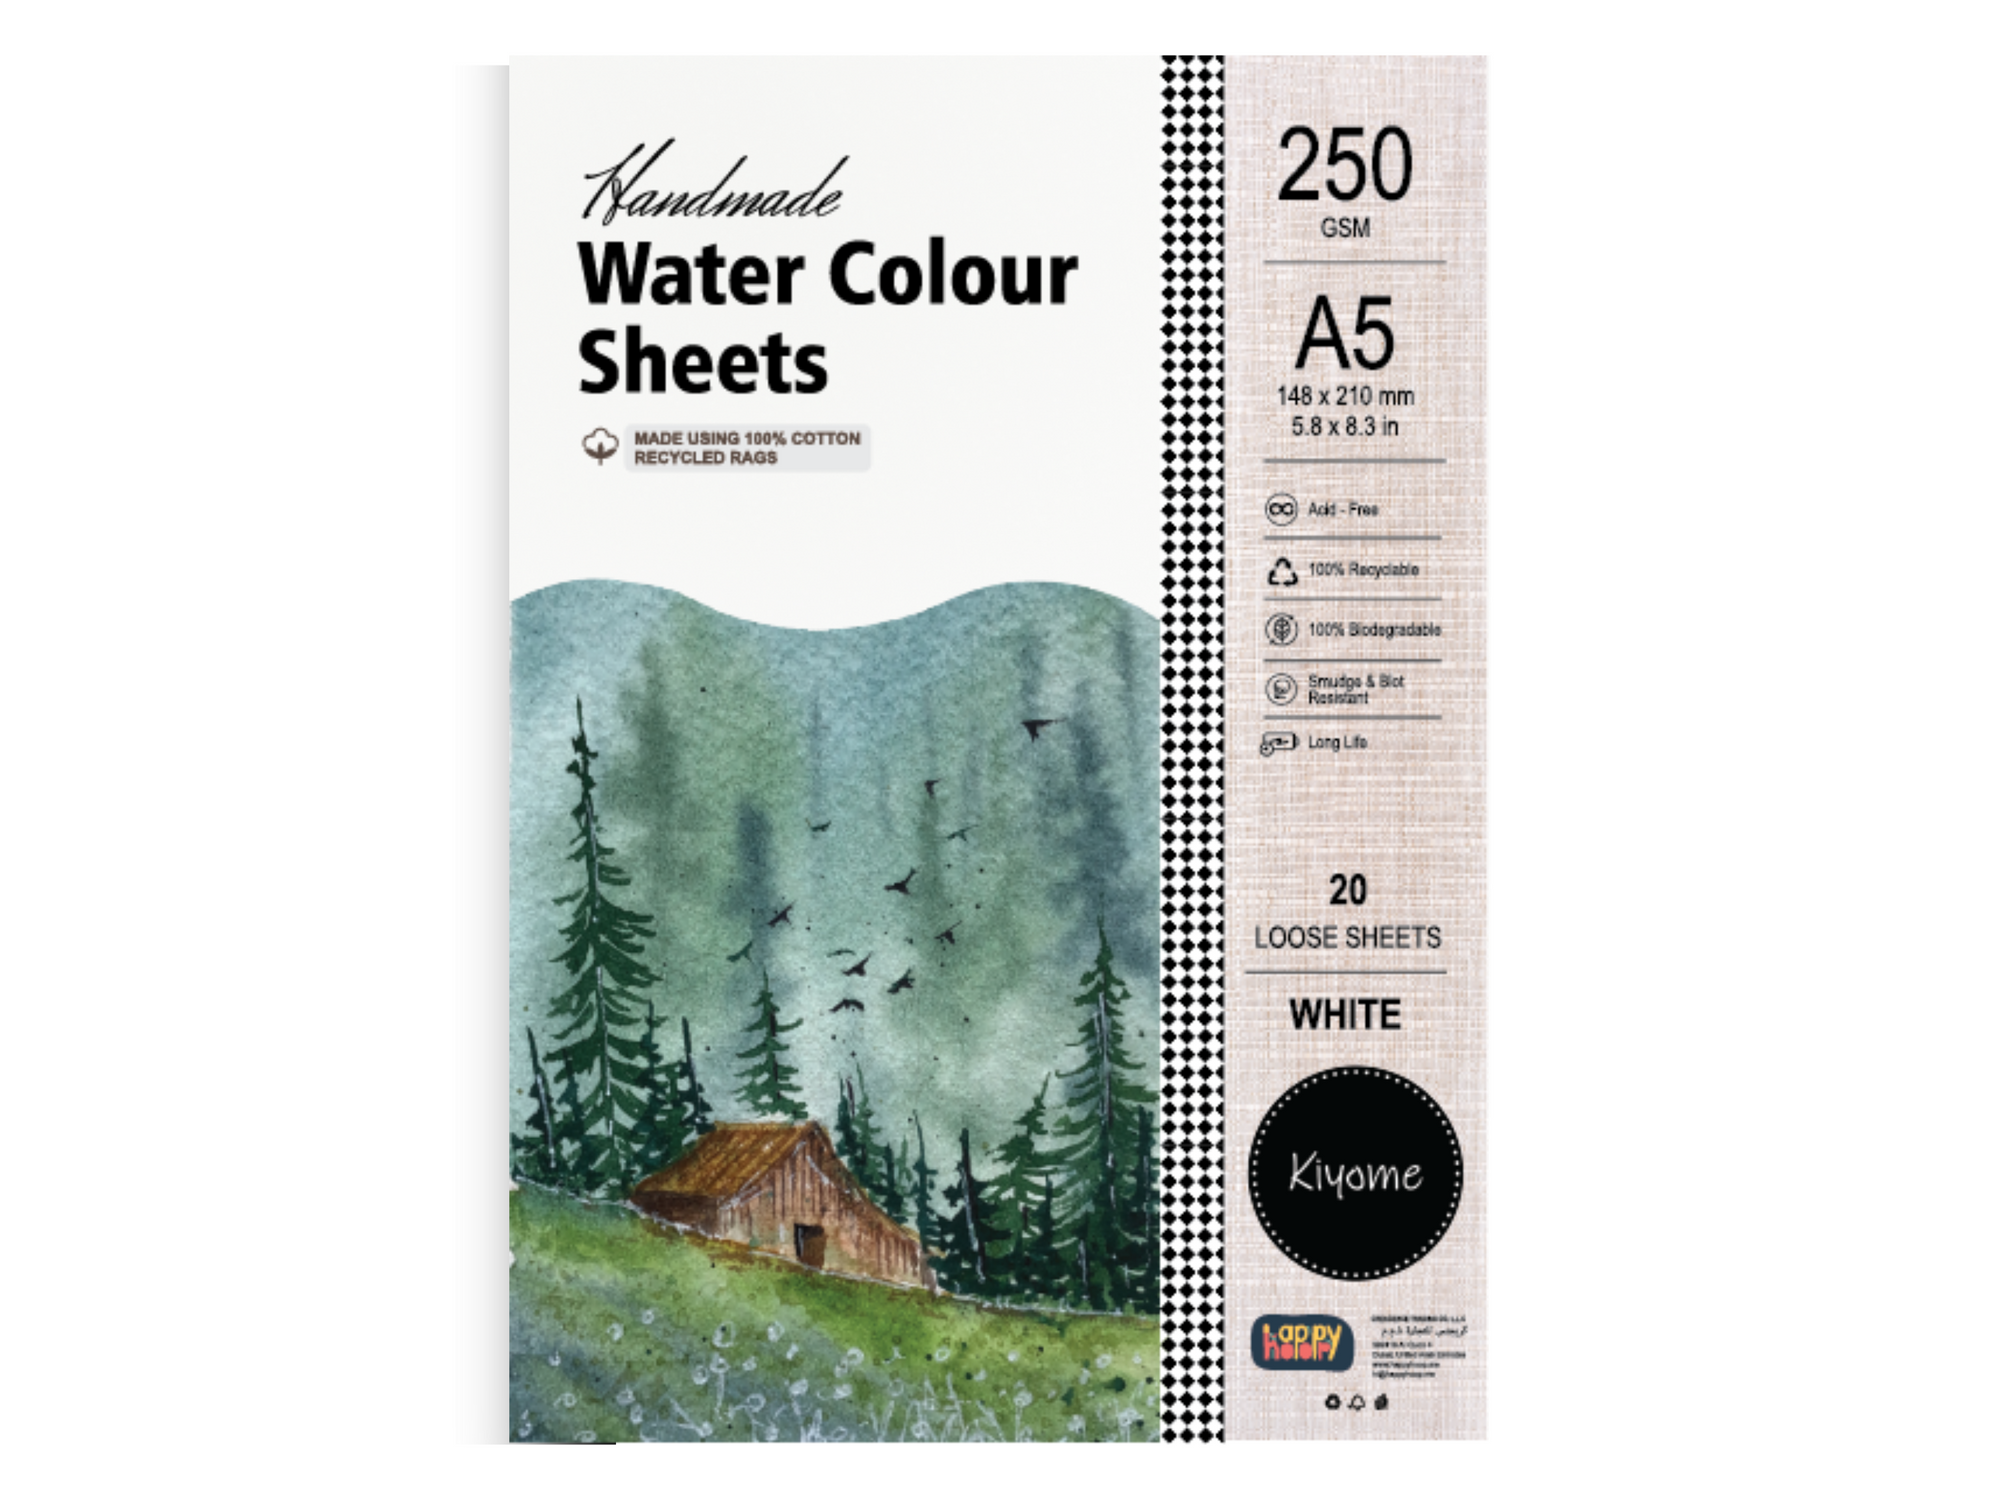 Kiyome Handmade Watercolour Loose Sheets | Cold Pressed | 250 GSM | A2 | 5 Sheets